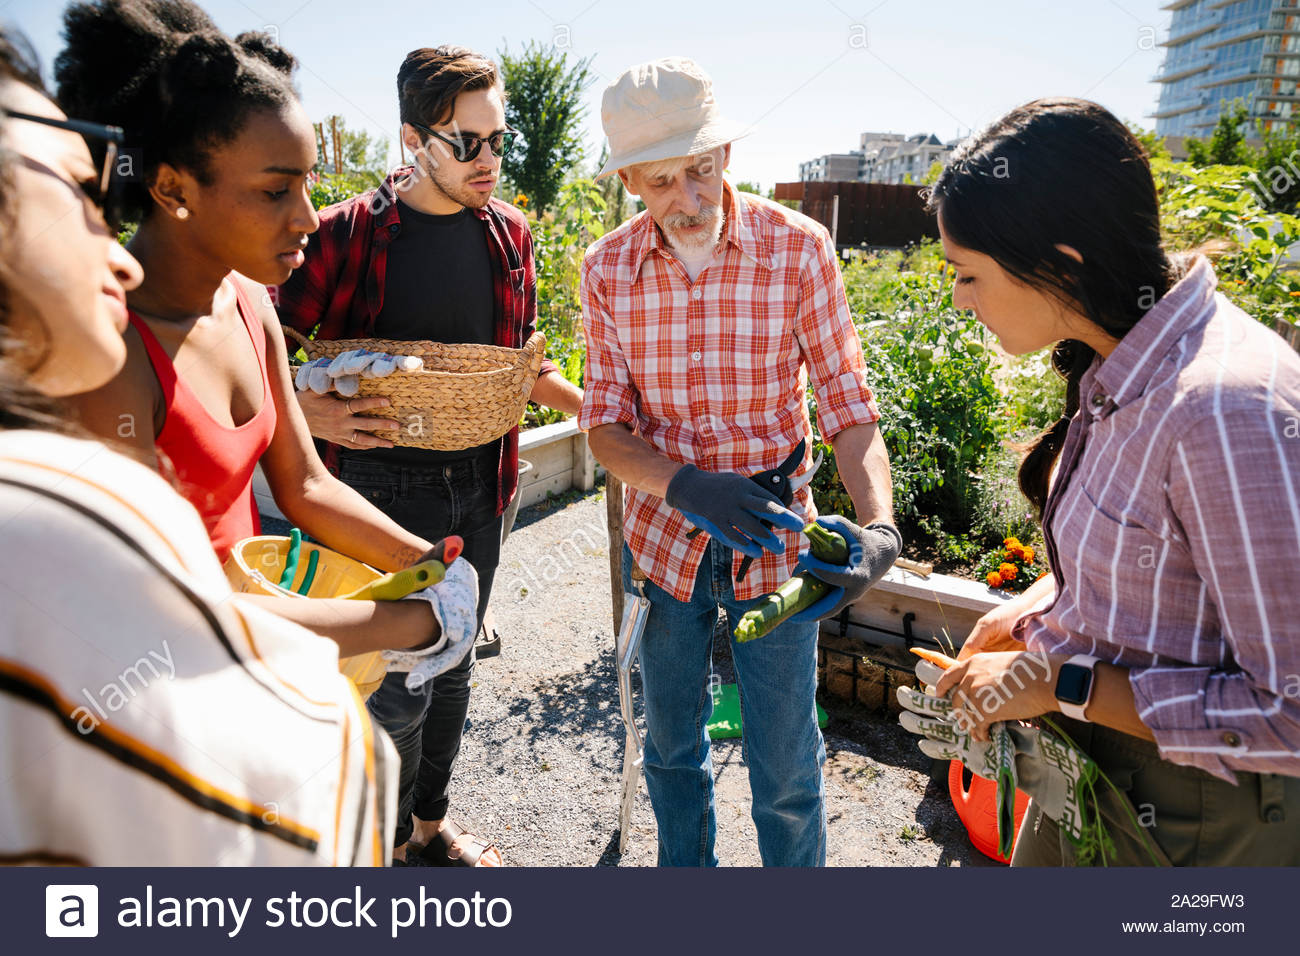 Man teaching gardening to young adults in sunny, urban community garden Stock Photo